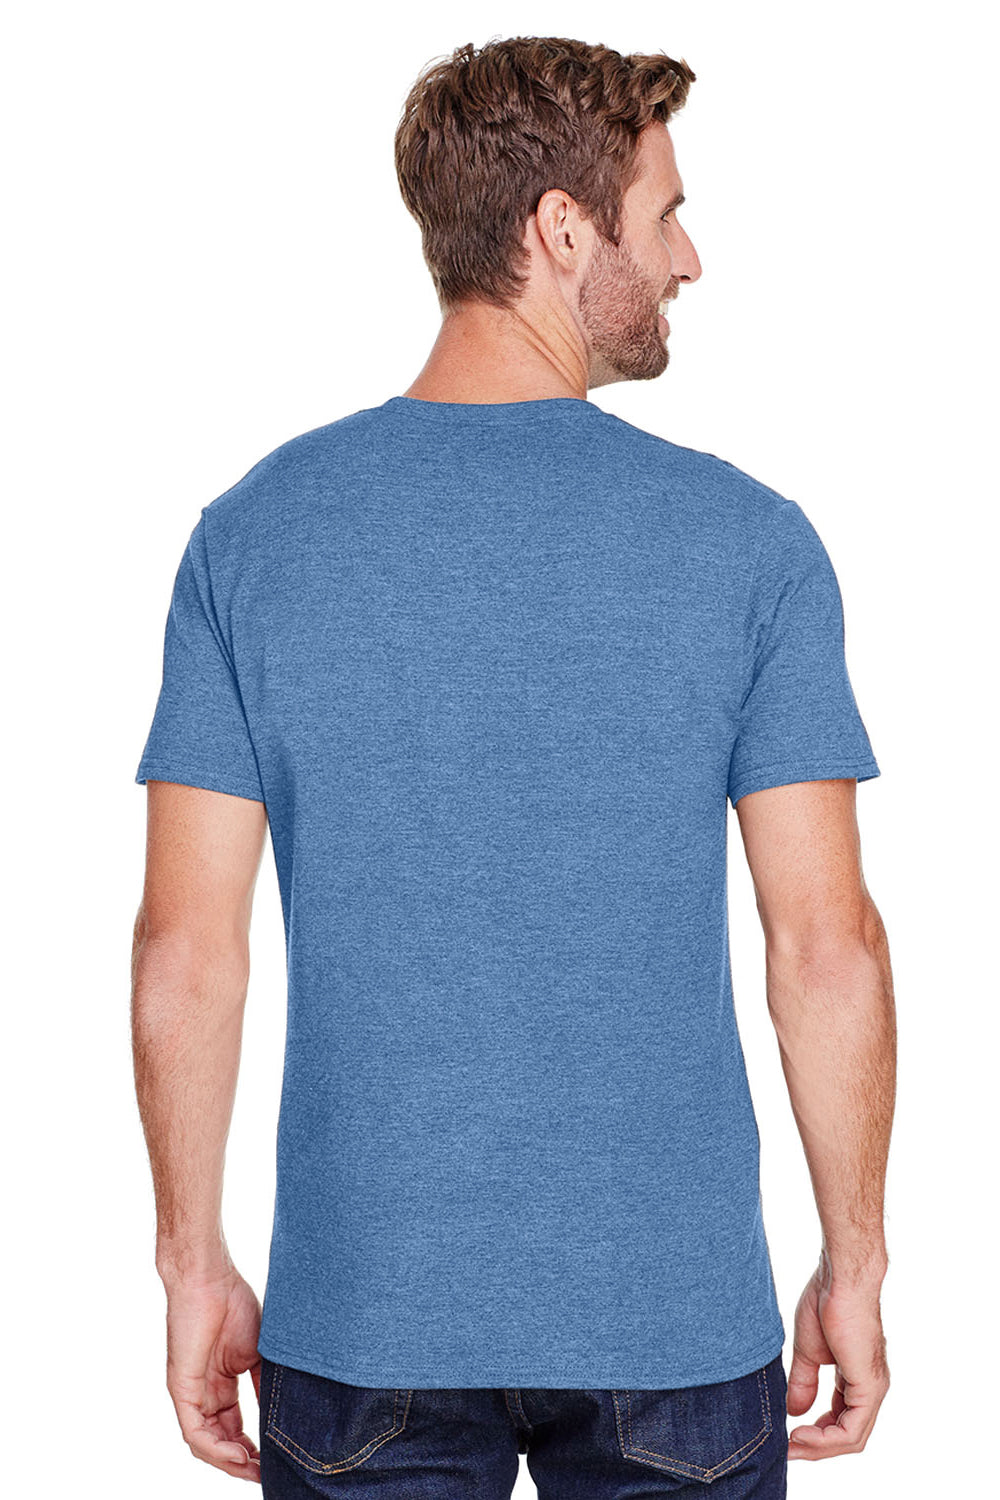 Jerzees 560MR Mens Premium Blend Short Sleeve Crewneck T-Shirt Heather Denim Blue Back